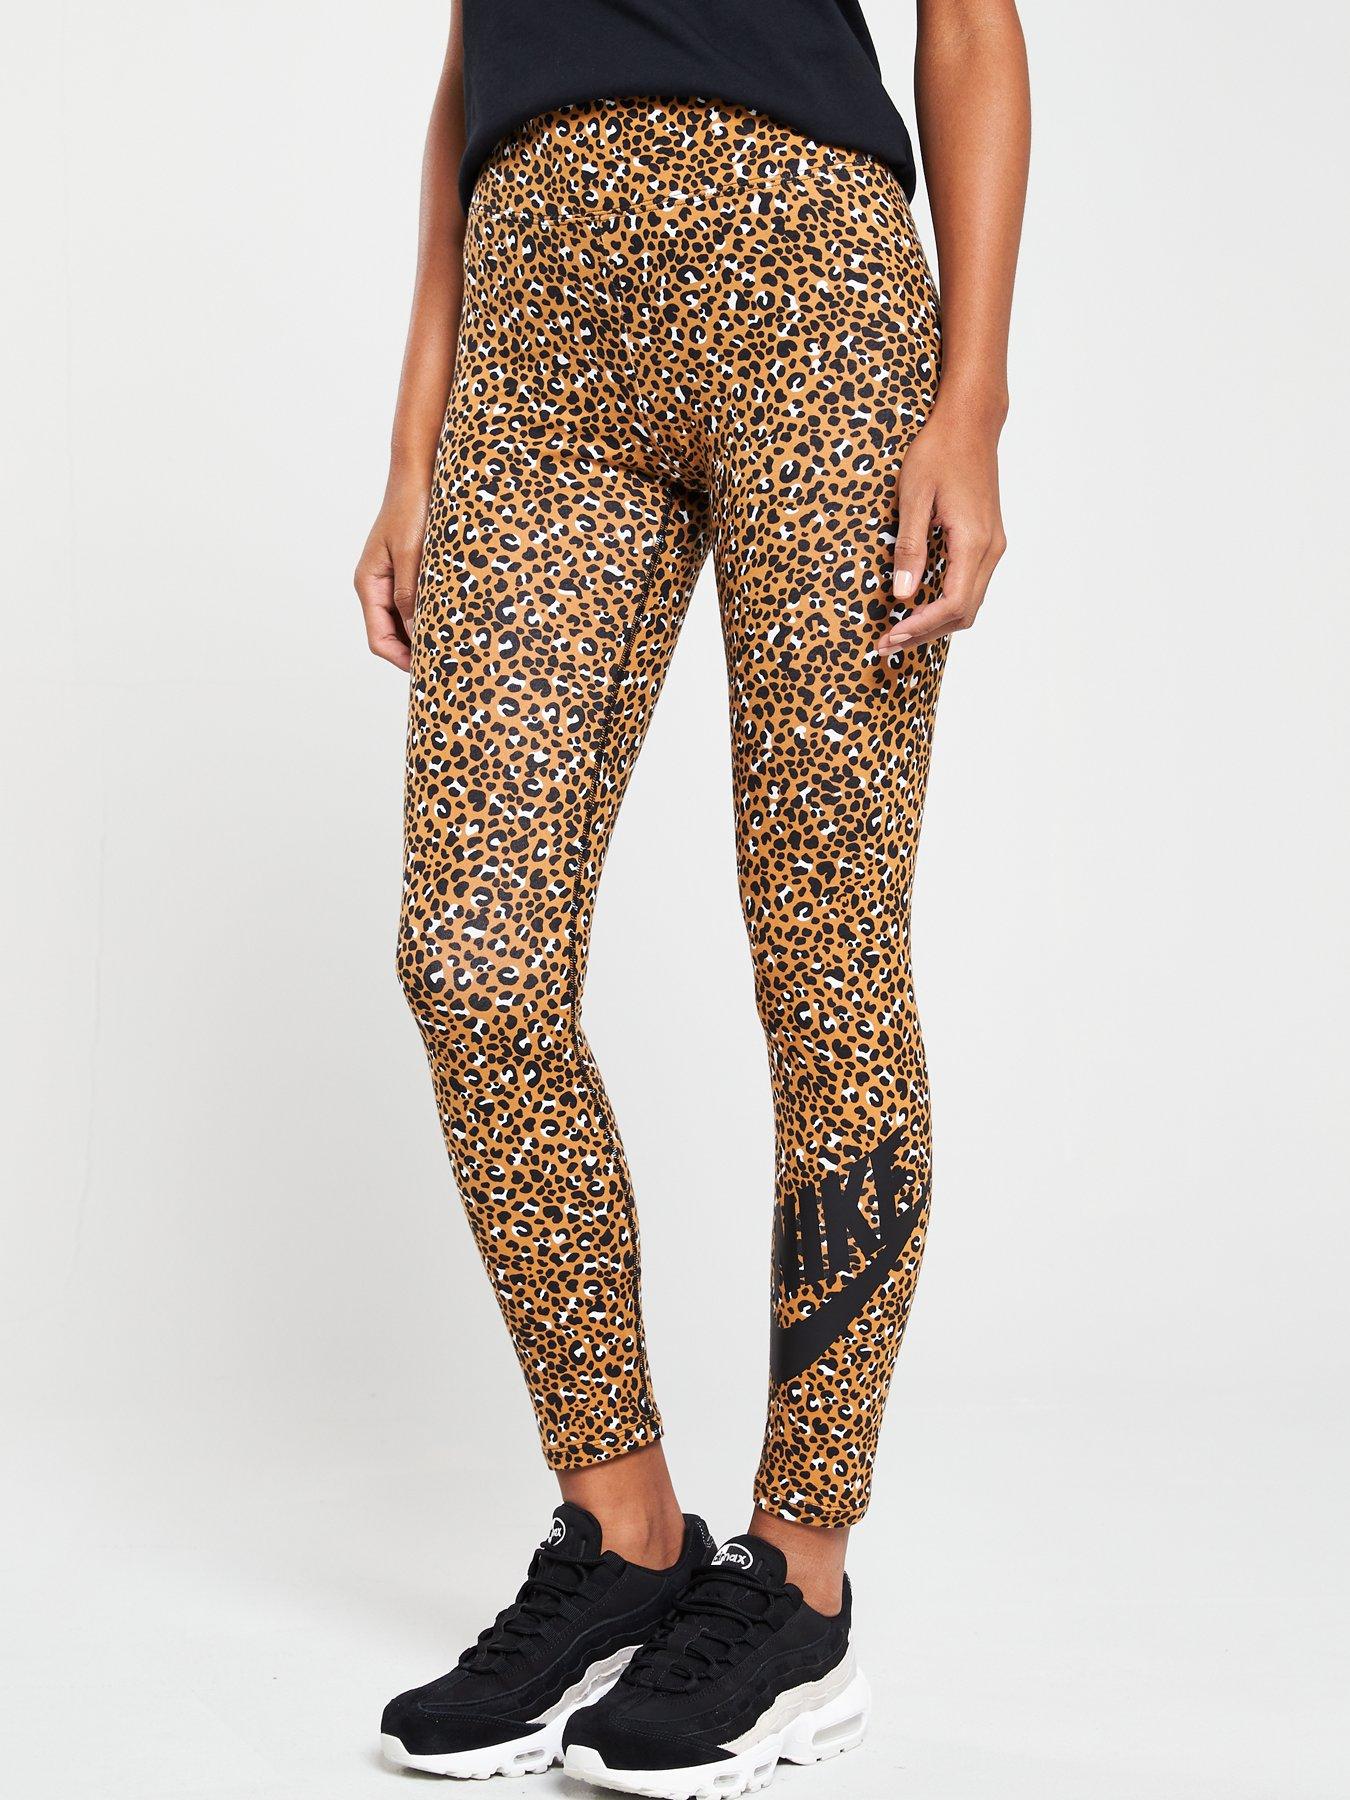 nike one leopard print leggings